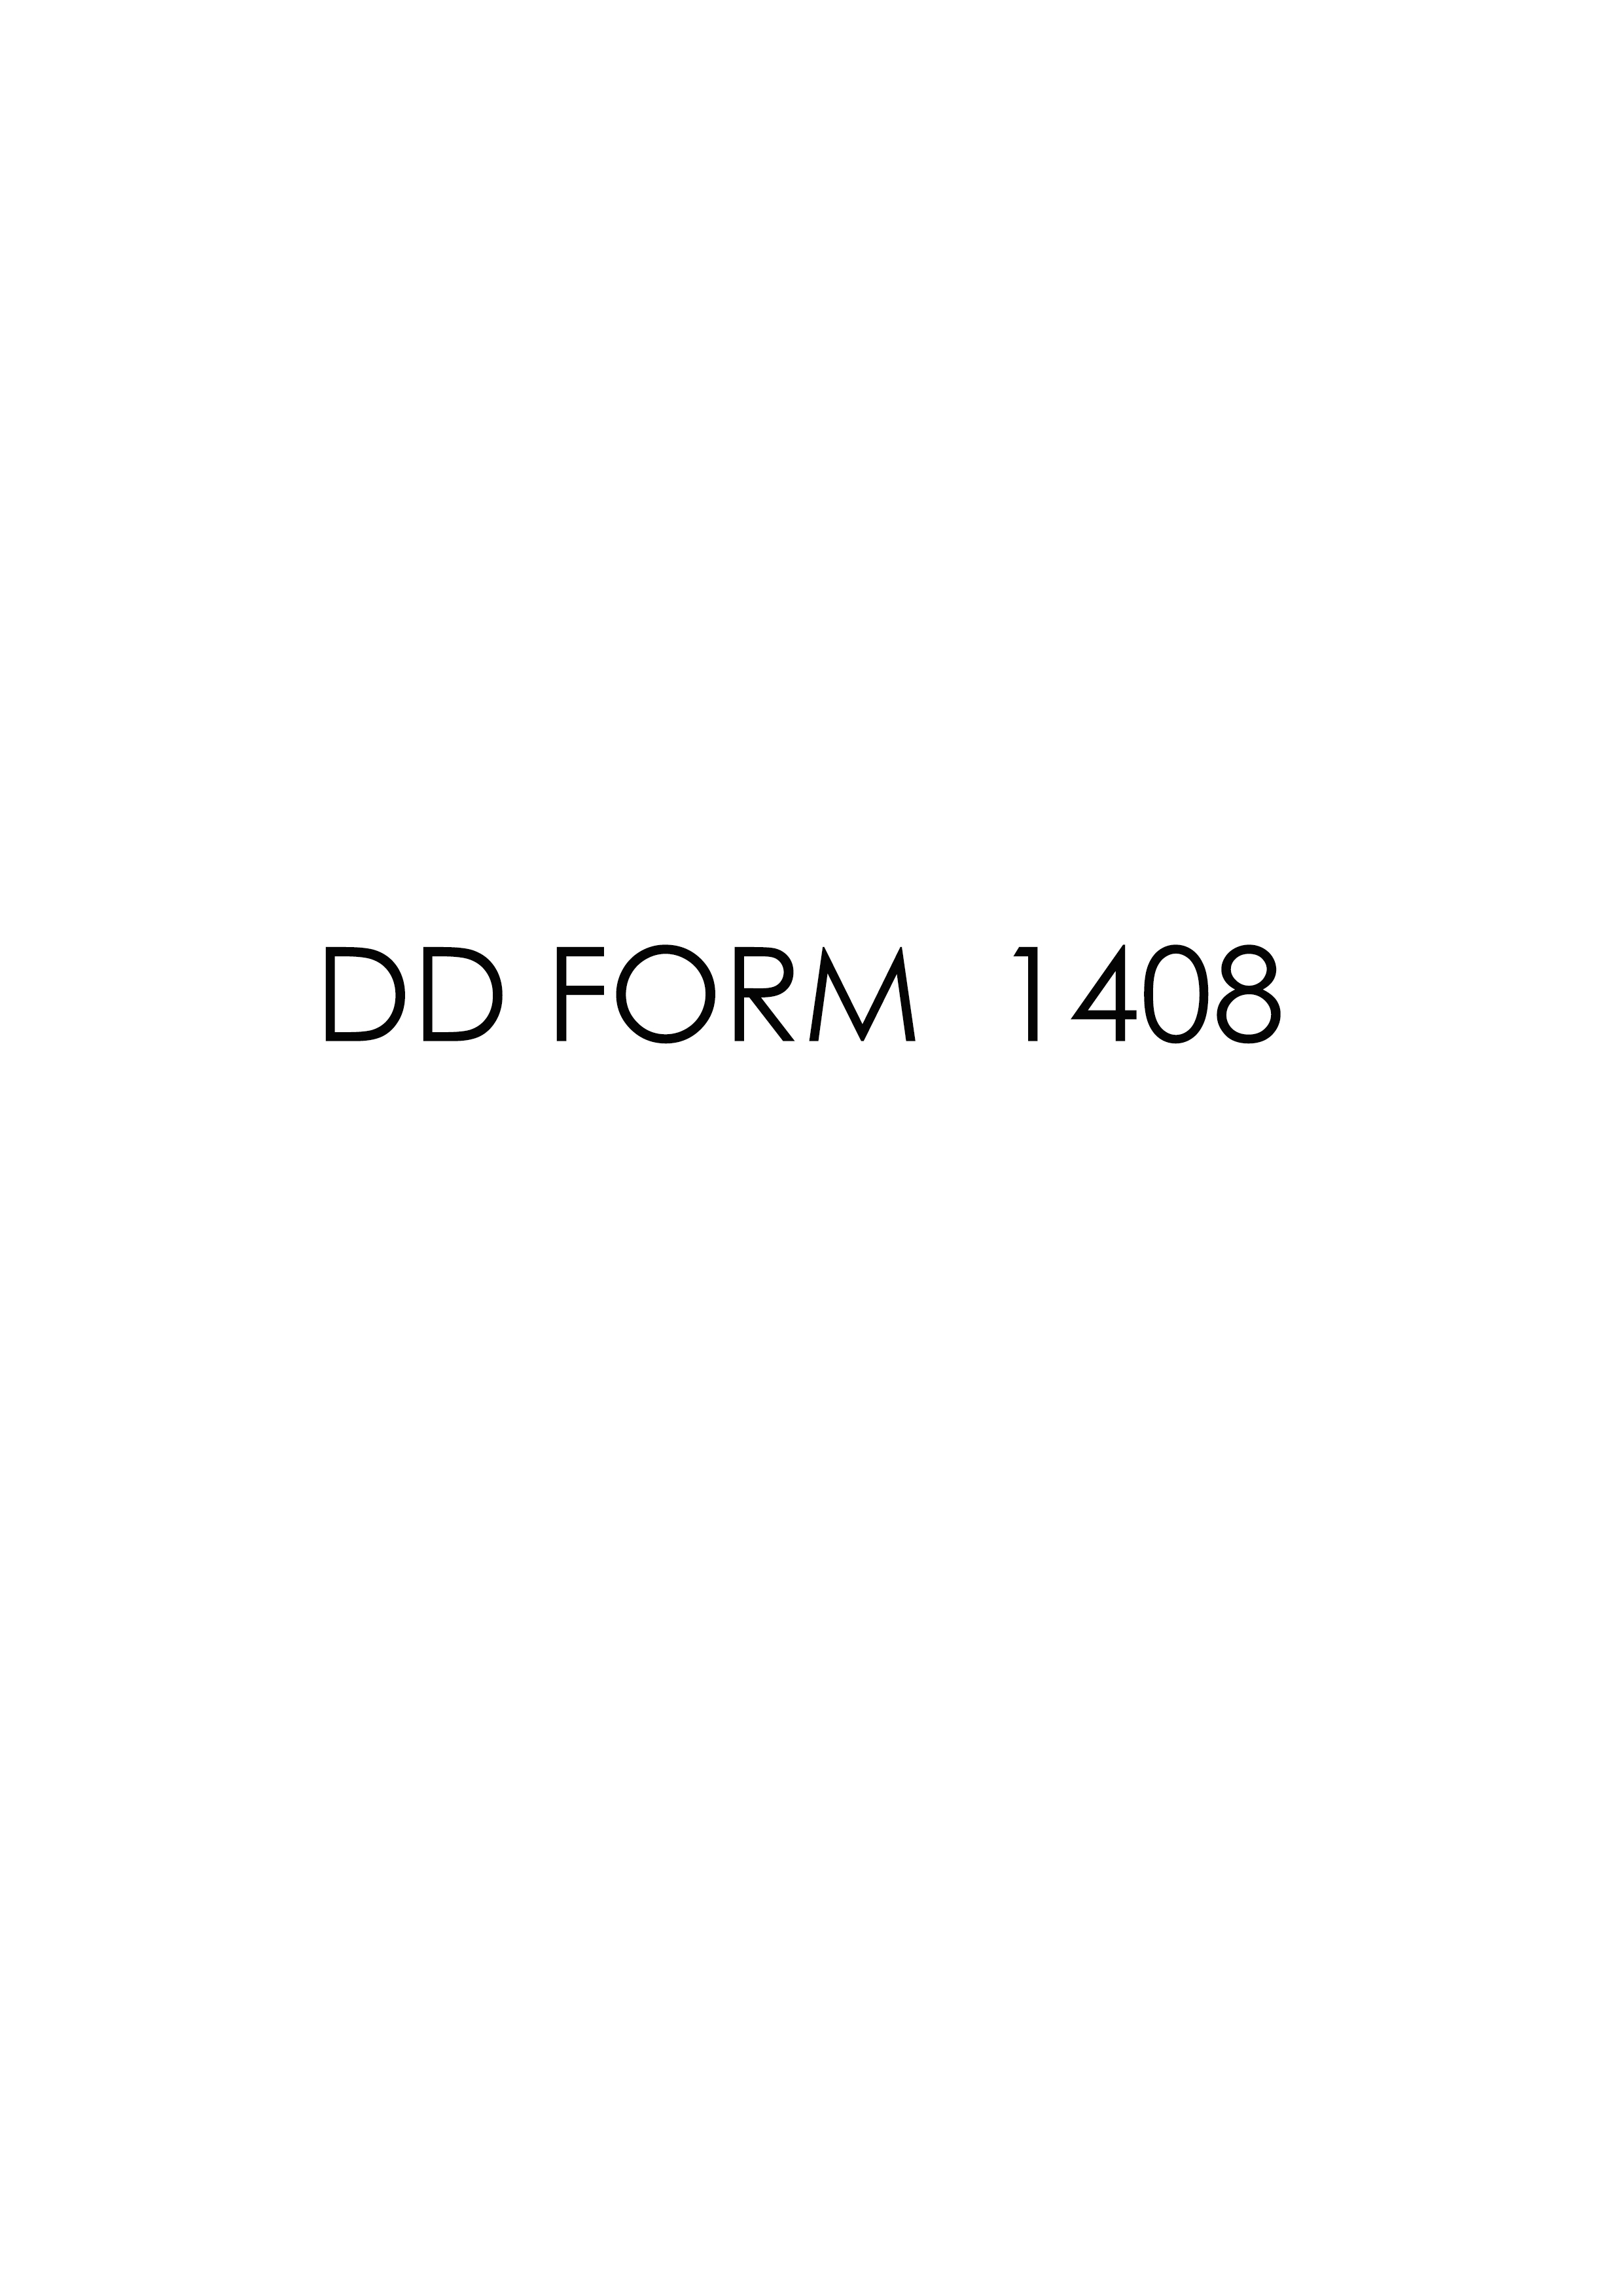 Download dd 1408 Form